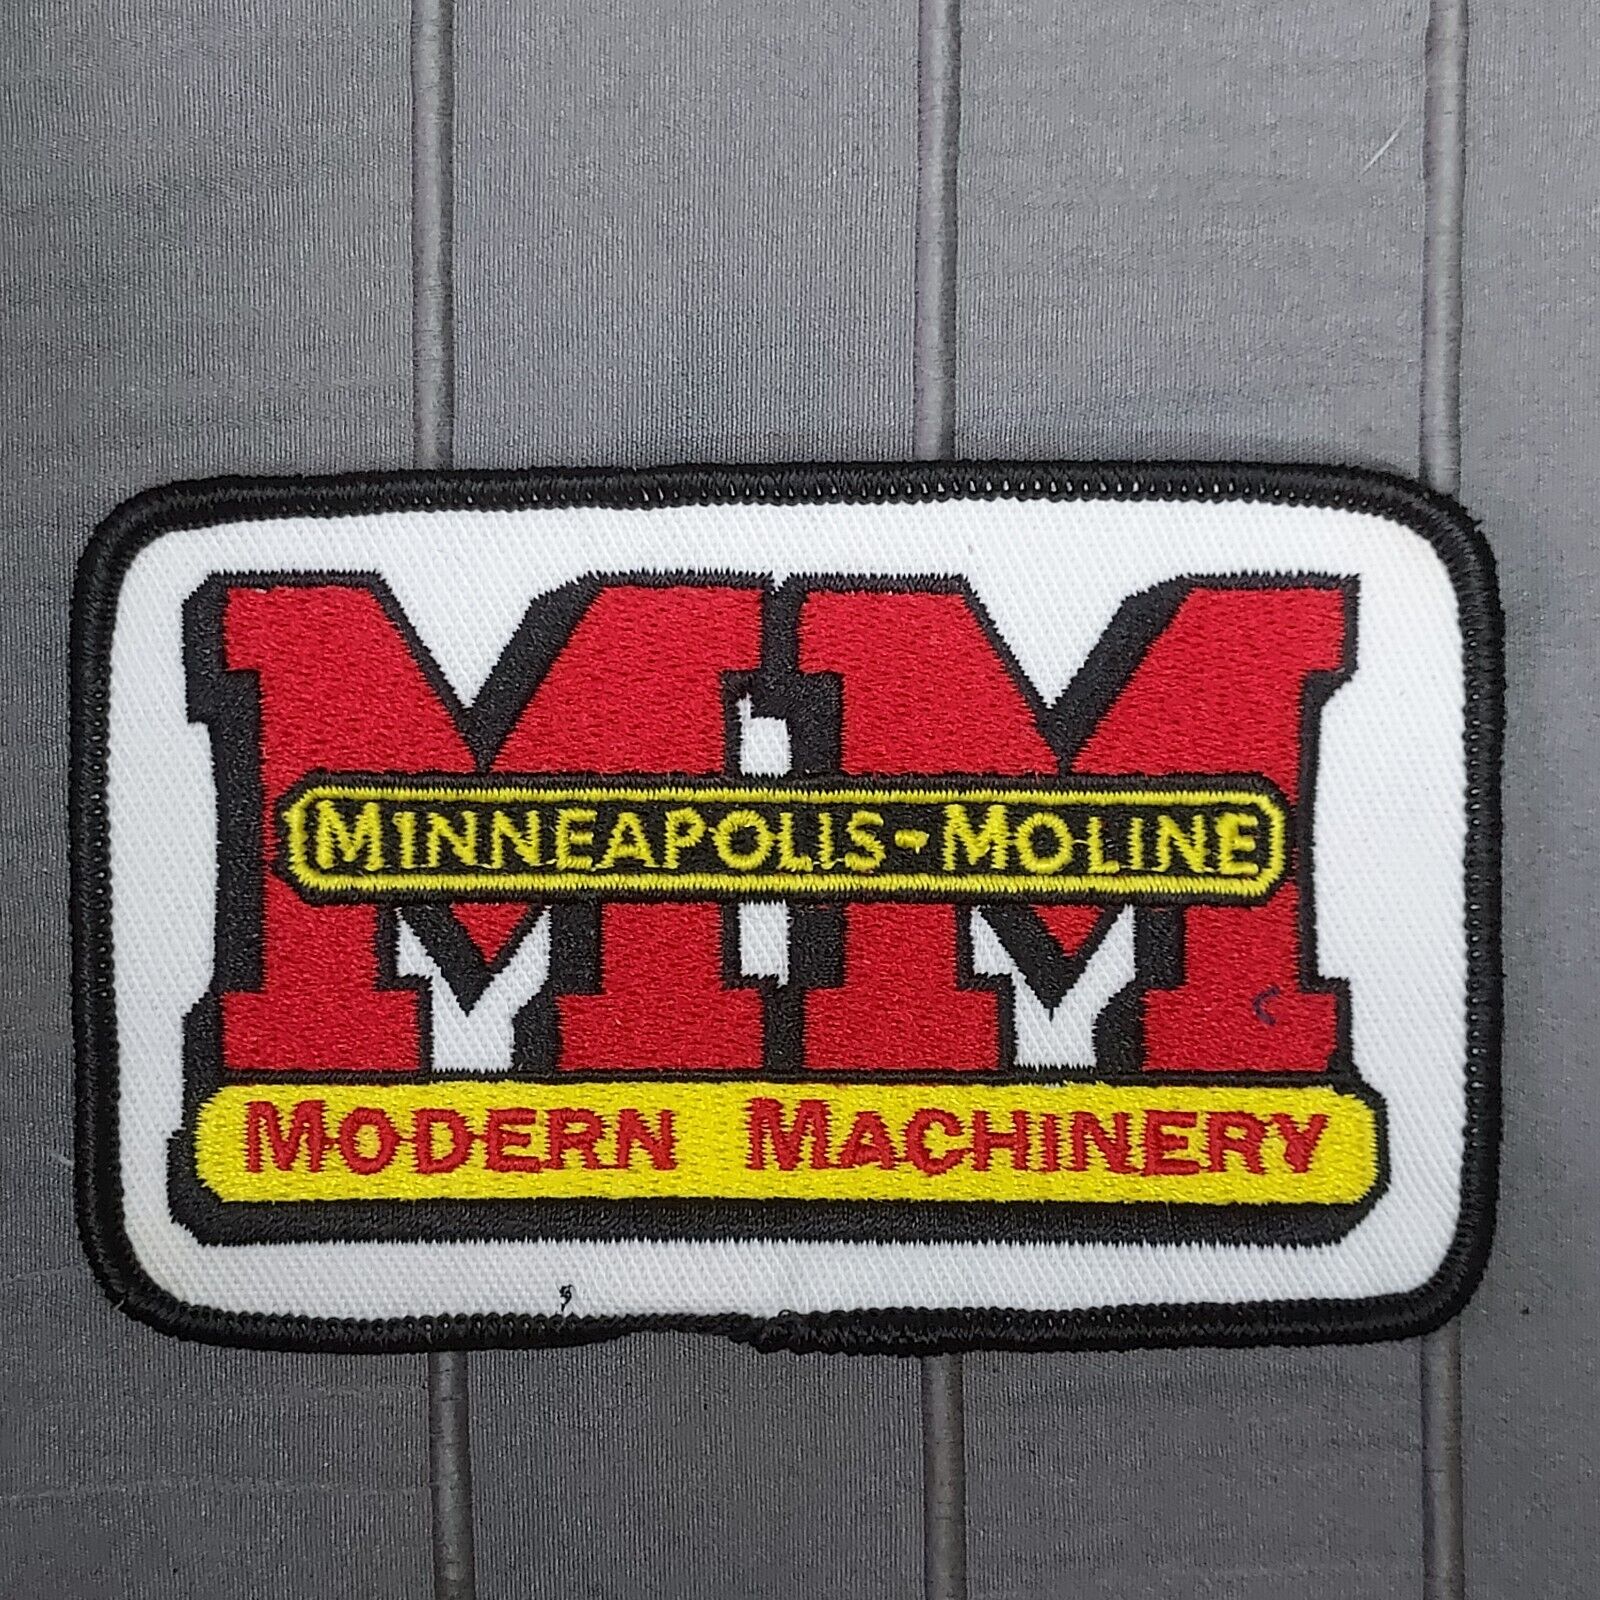 Minneapolis Moline MM Logo Modern Machinery Uniform Hat Jacket Coat Patch 